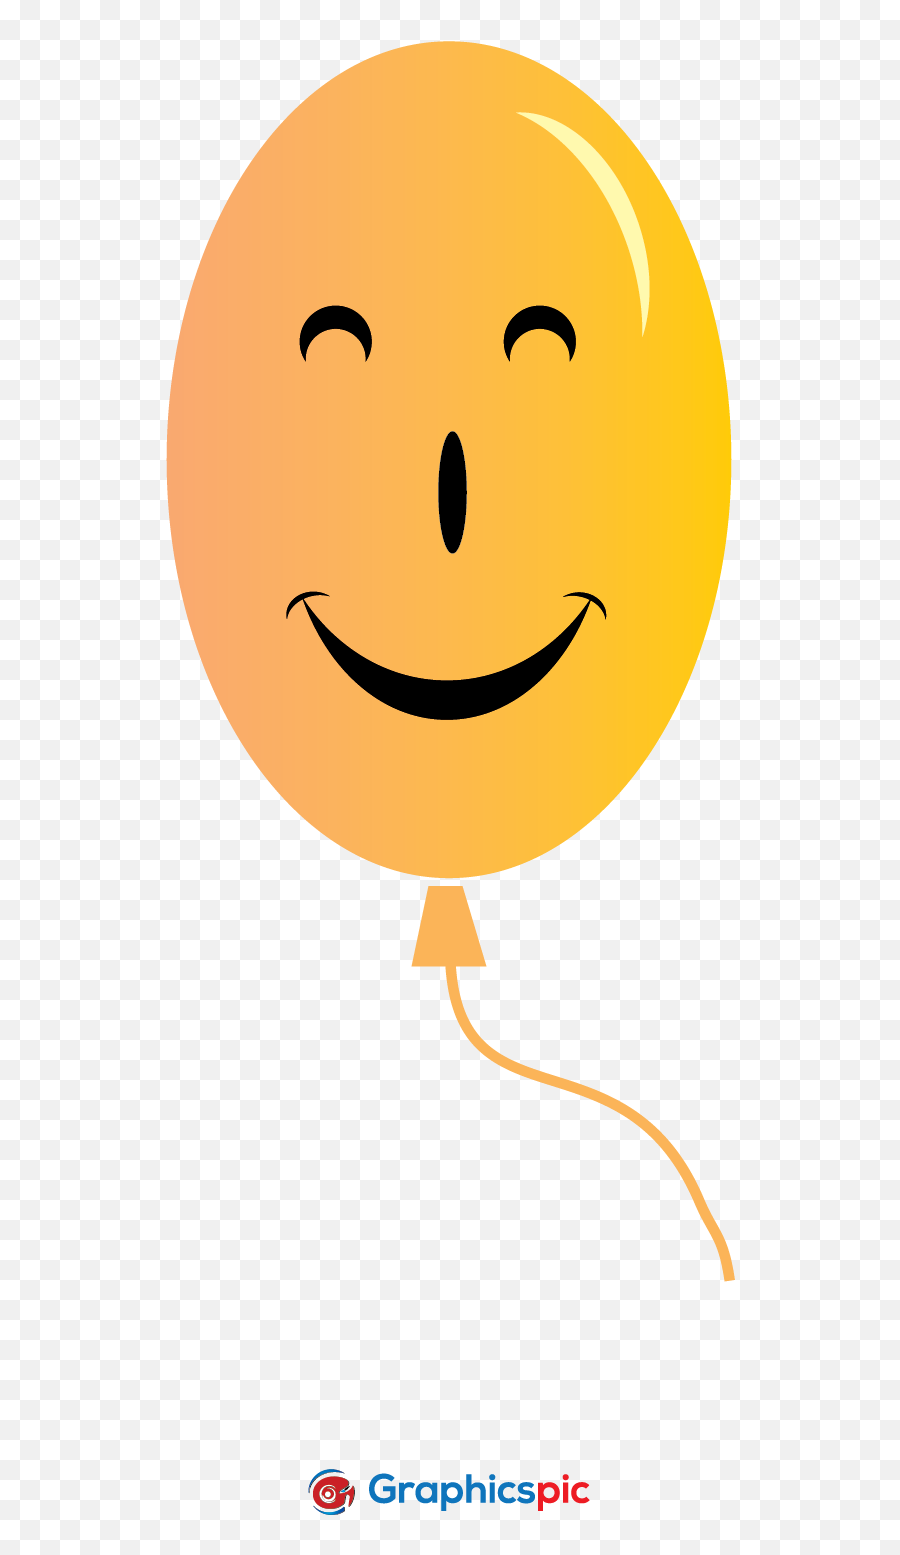 Background Of Smiling Balloon - Happy Emoji,Emoticon Background Vector